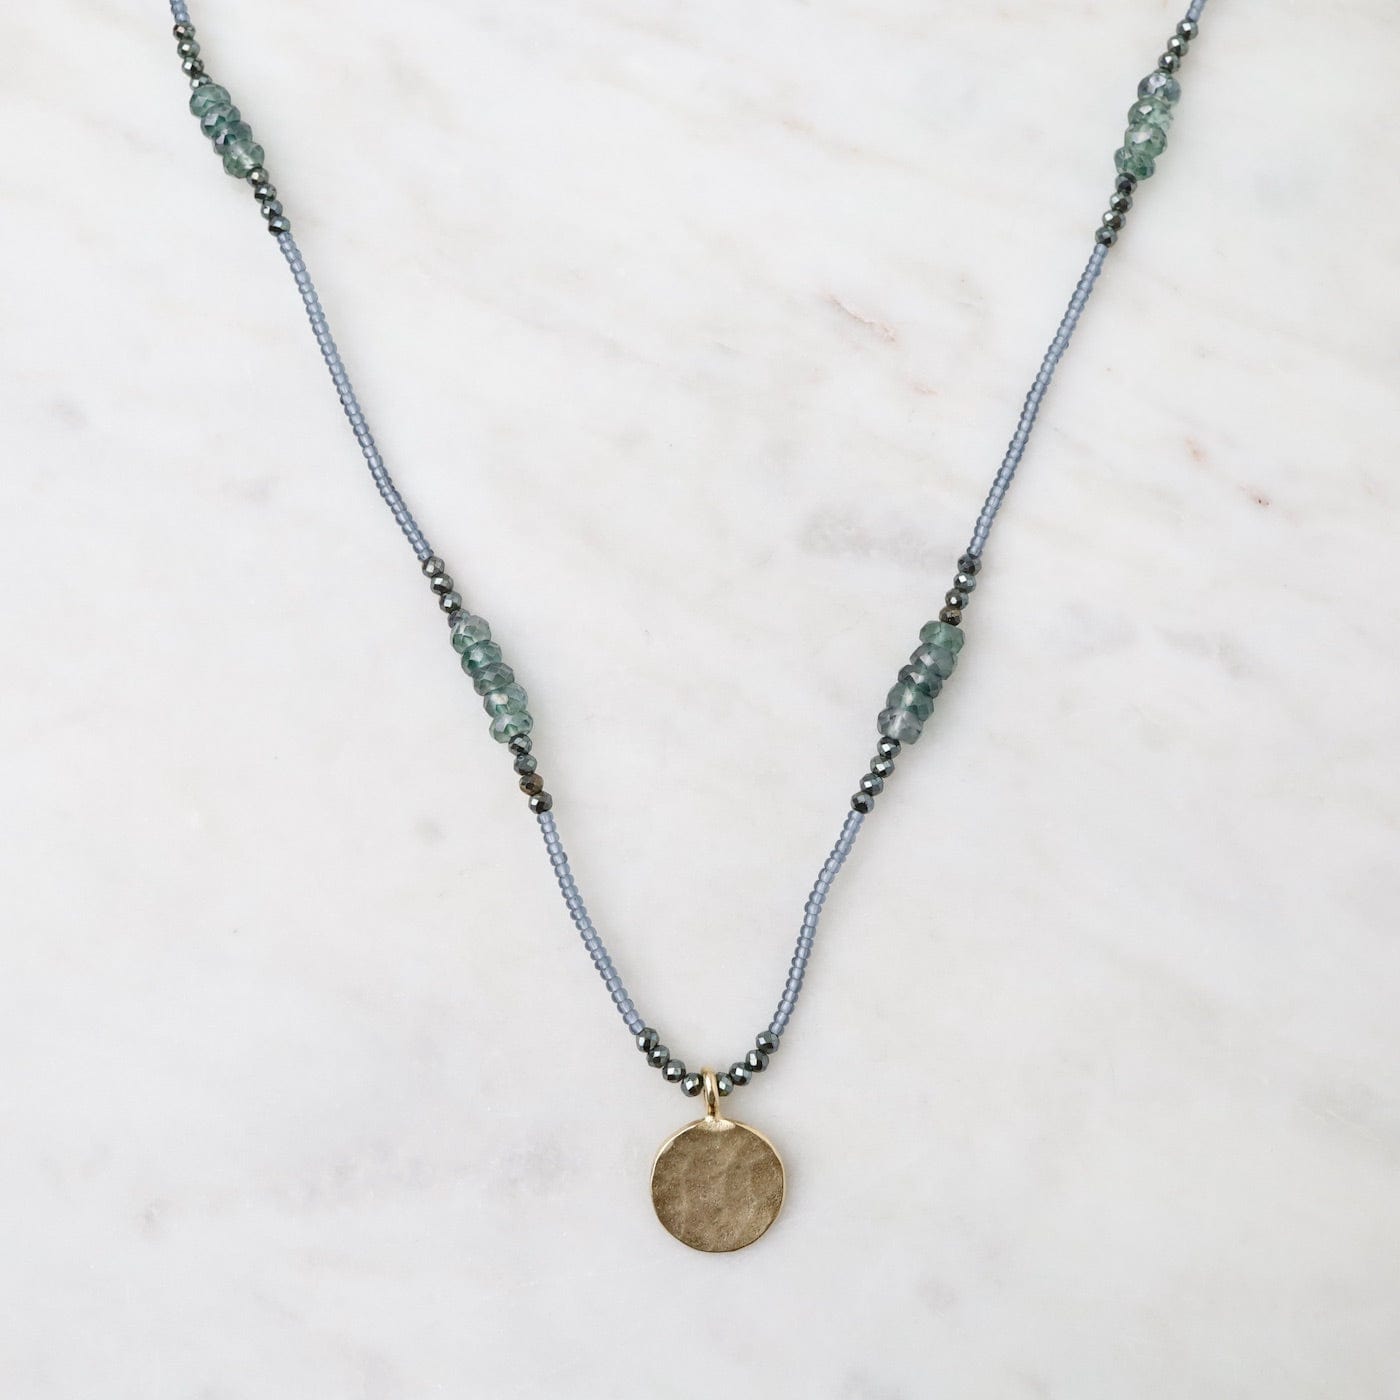 NKL Grey Seed & Mystic Quartz Bead Pendant Necklace